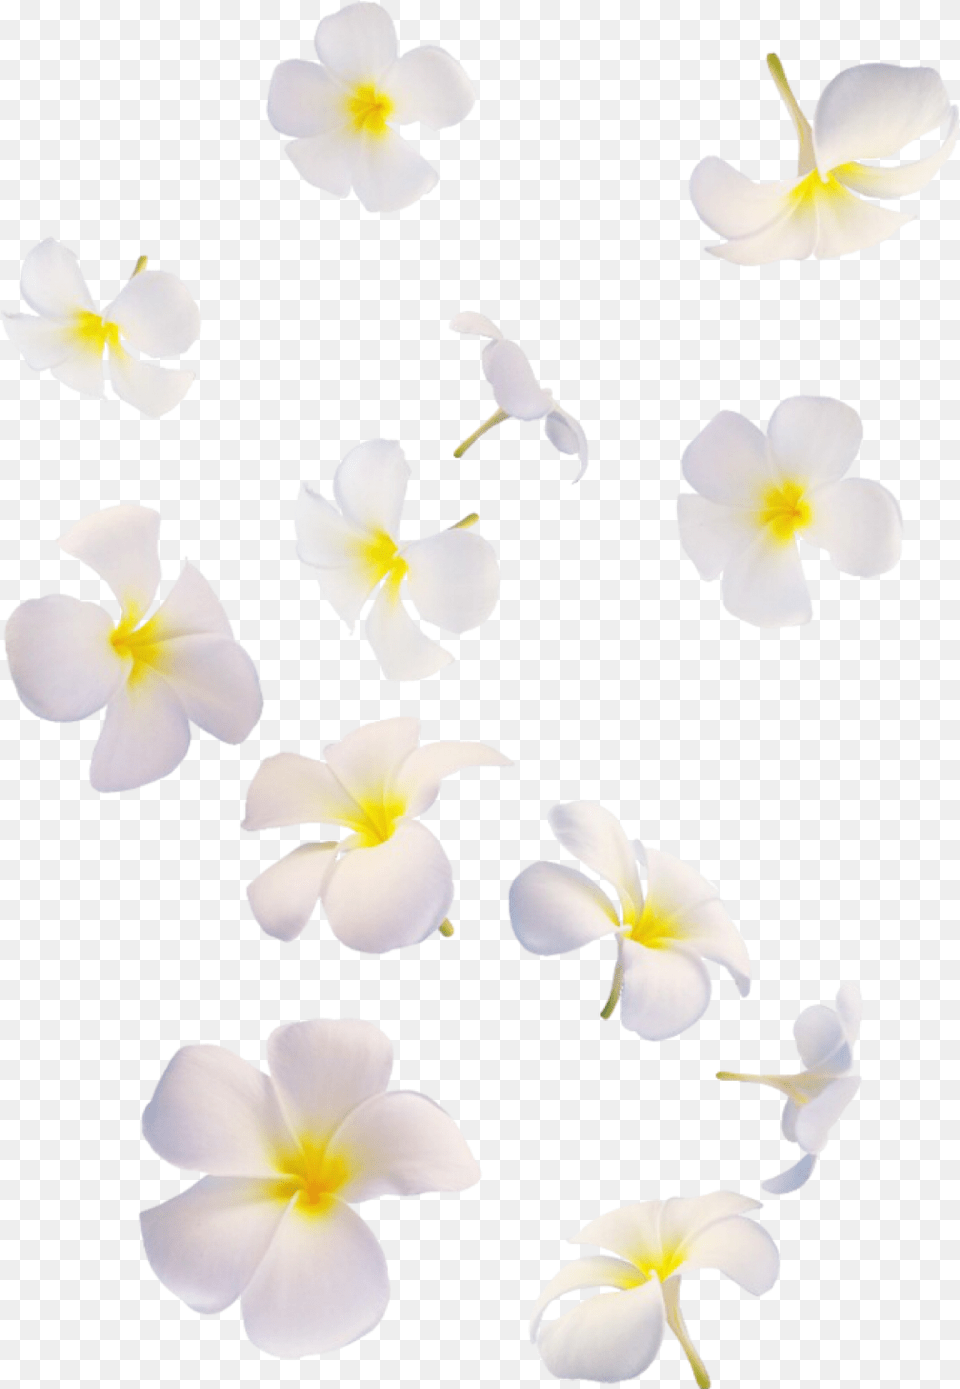 Falling White Flowers Flowers White Falling, Flower, Petal, Plant Png Image